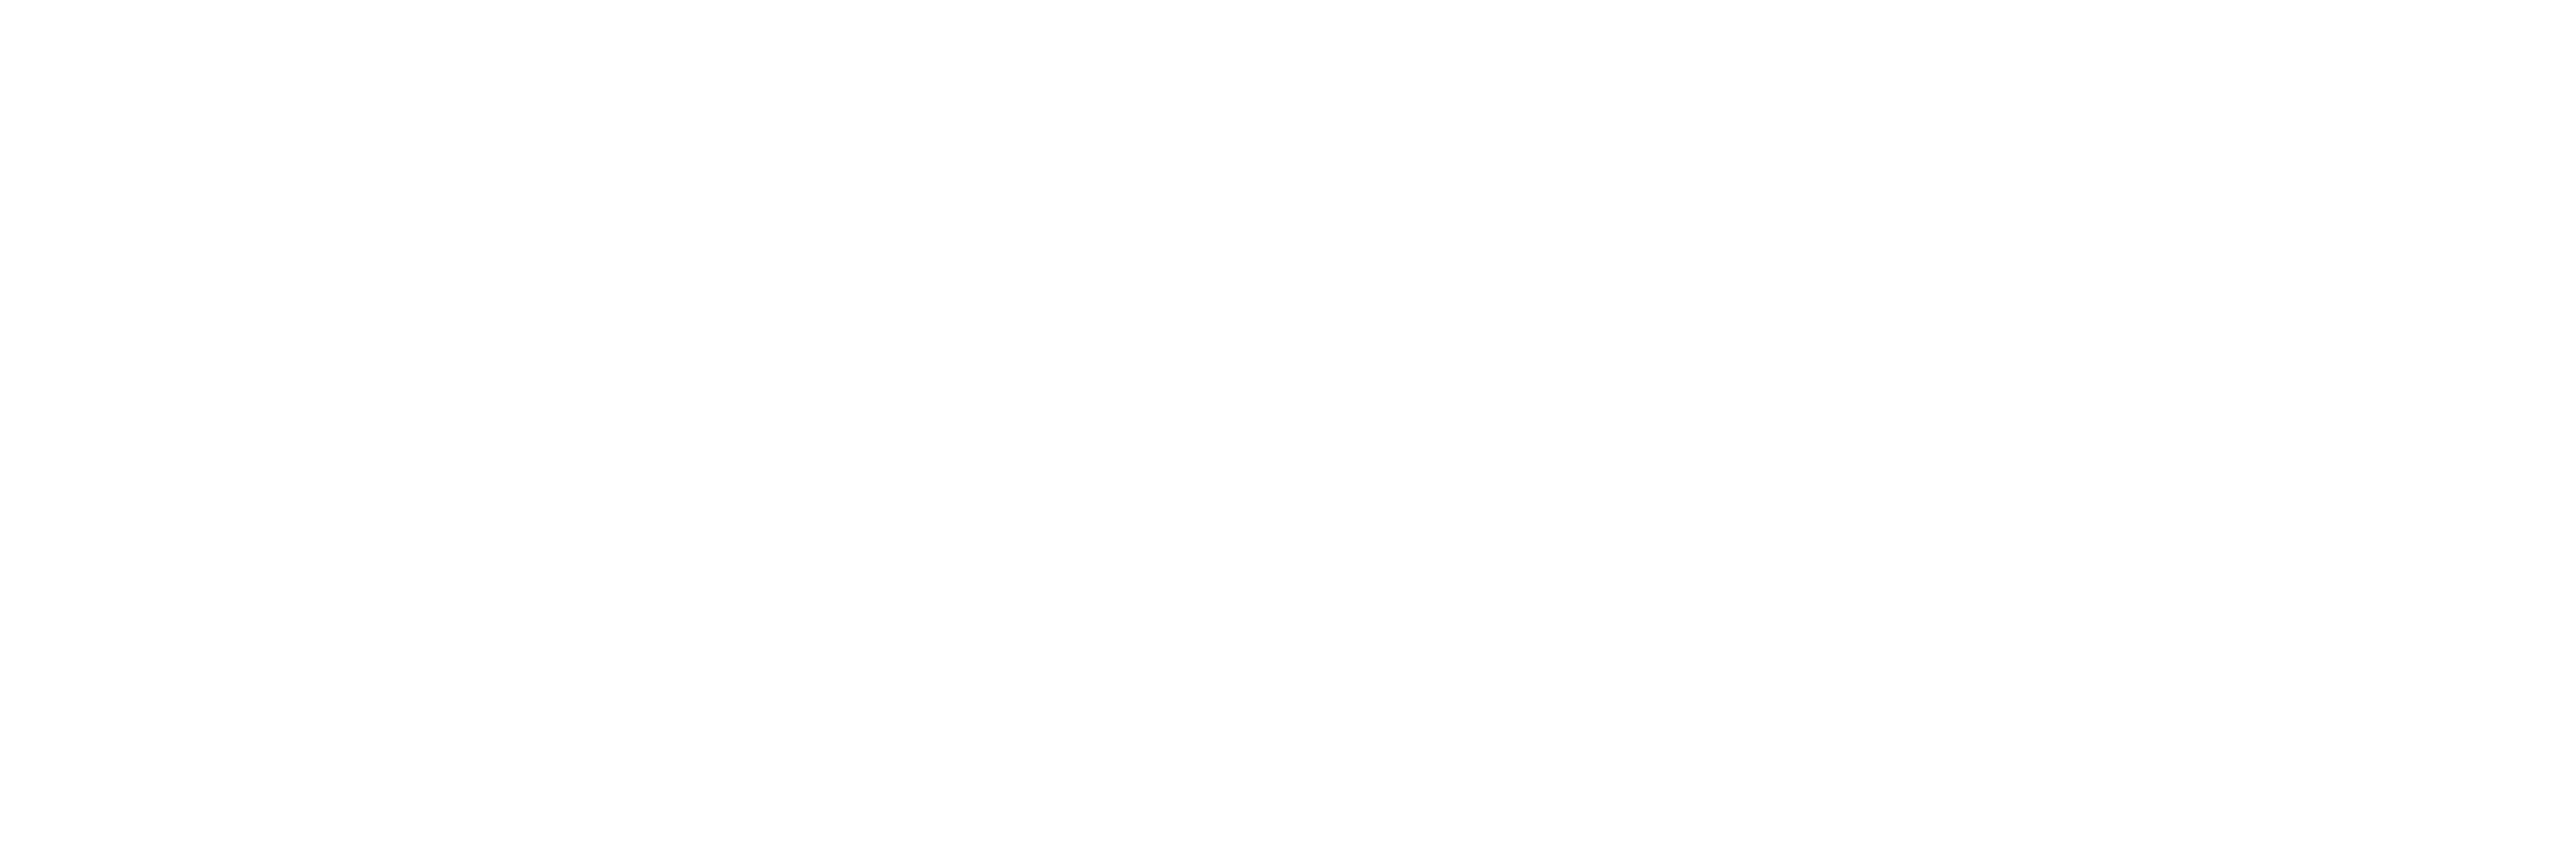 Student Scientists